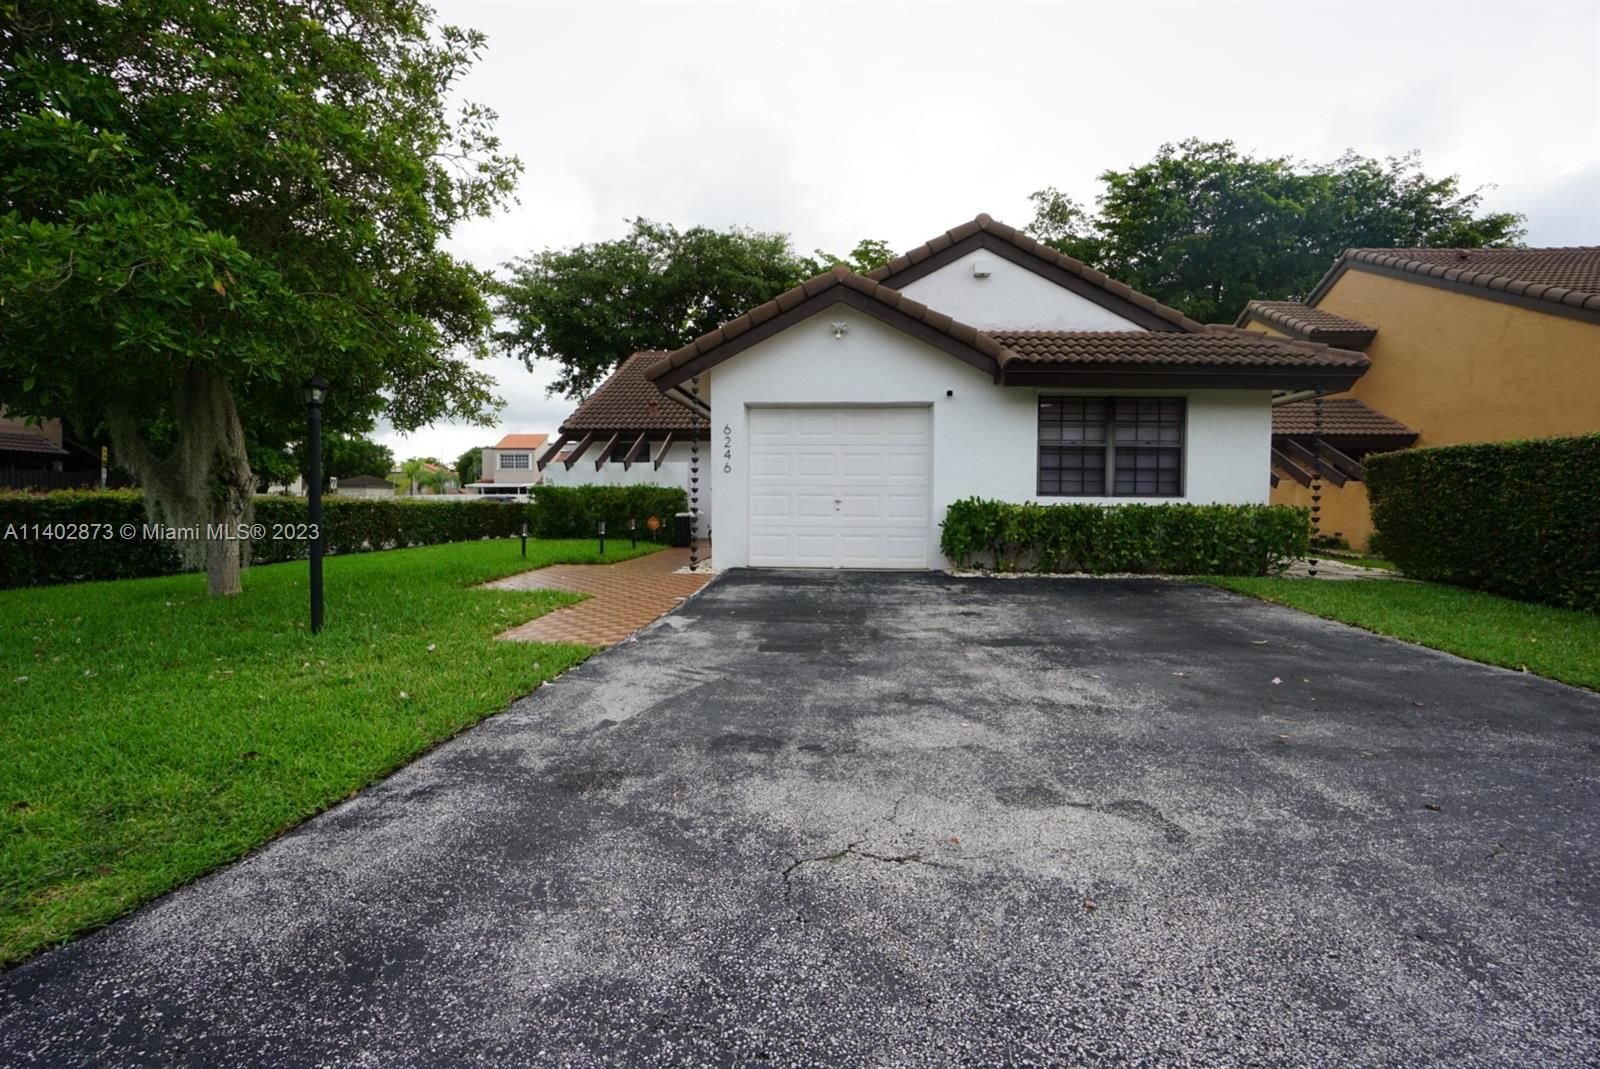 Real estate property located at 6246 127th Pl, Miami-Dade County, Miami, FL